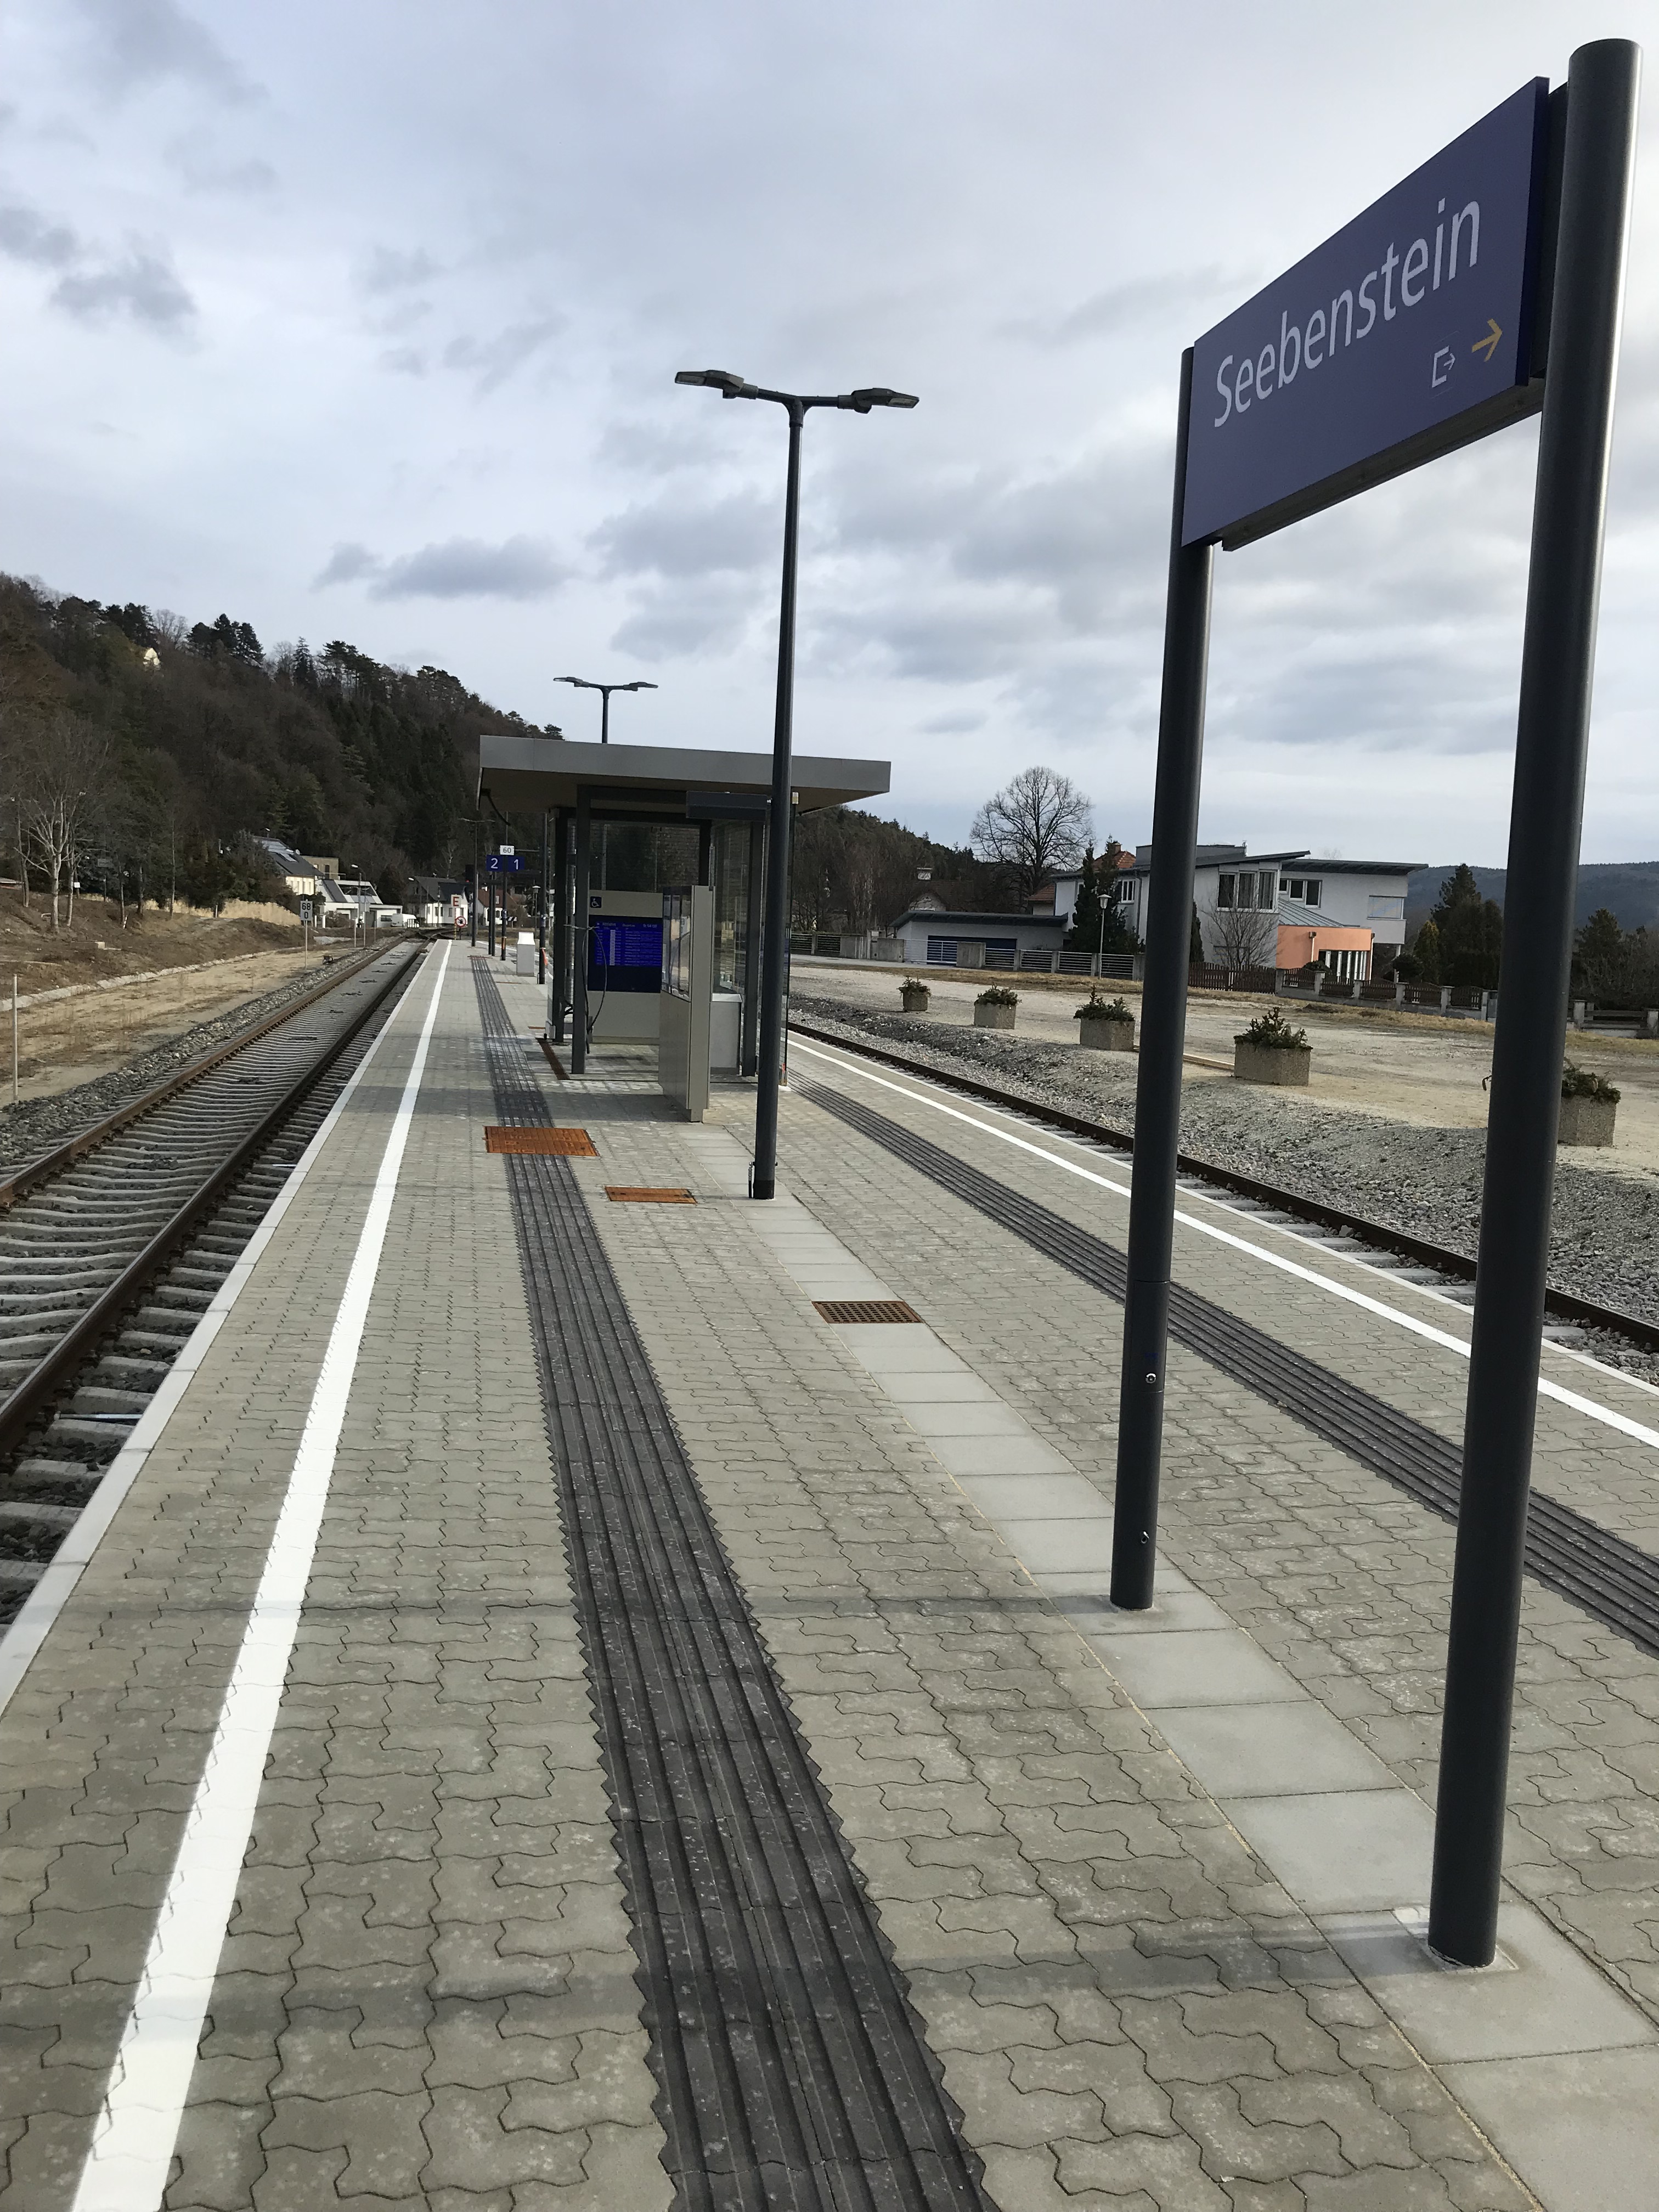 Umbau Bahnhof Seebenstein - Construcții civile